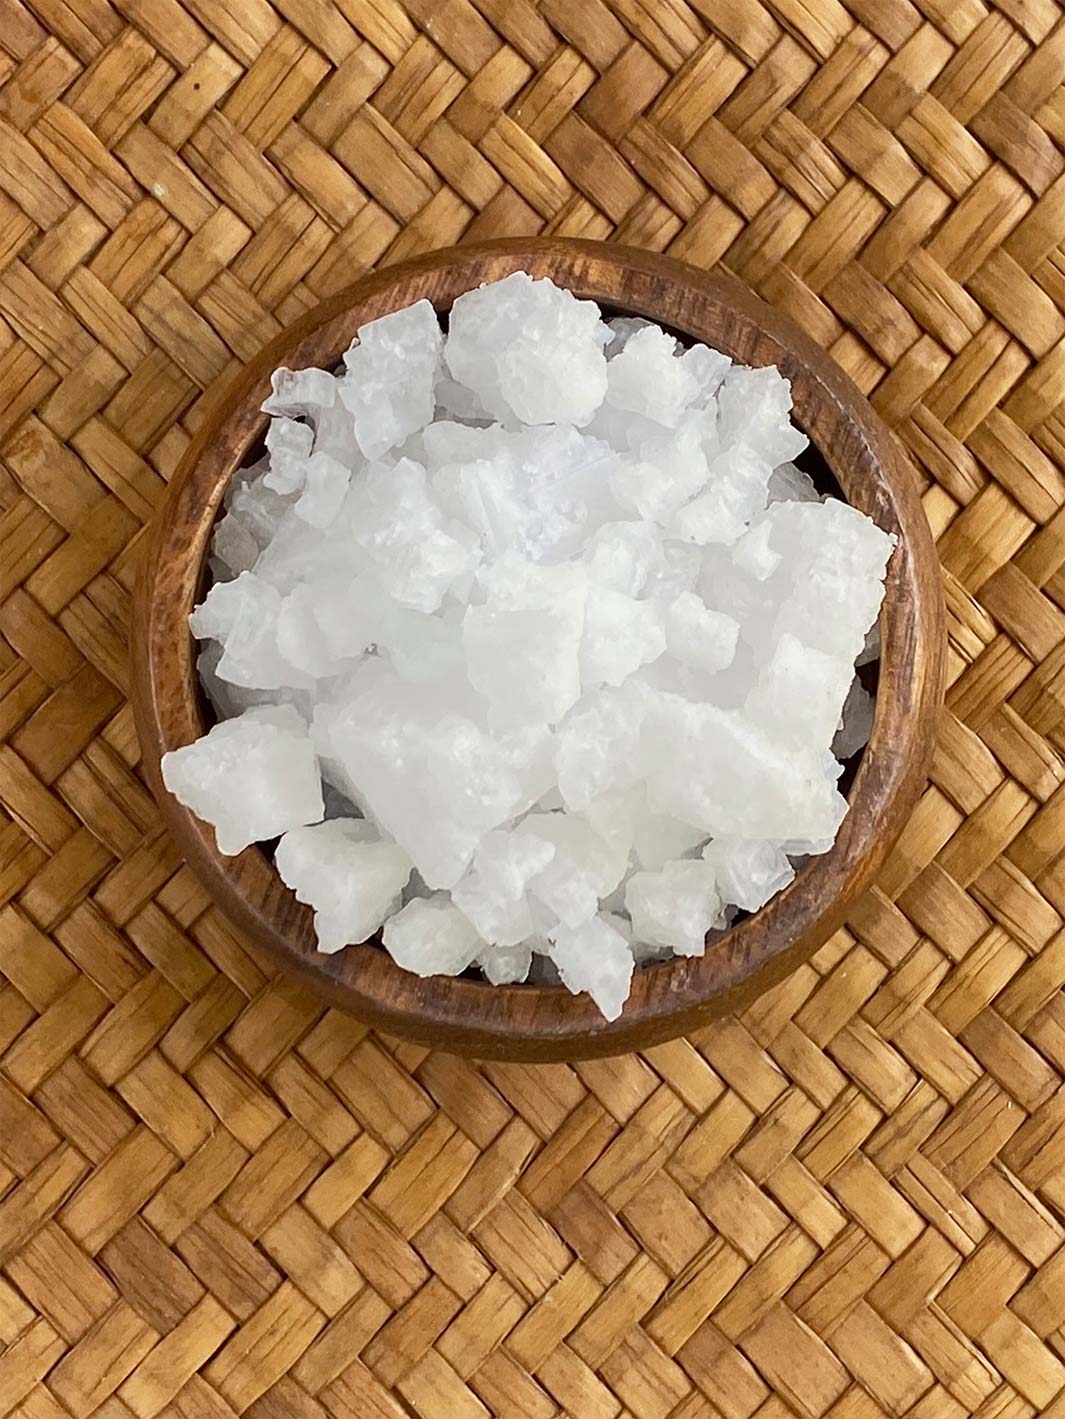 Pop-Up Mākeke - Sea Salts of Hawaii - Pure Kona Grinder Sea Salt Pouch Texture